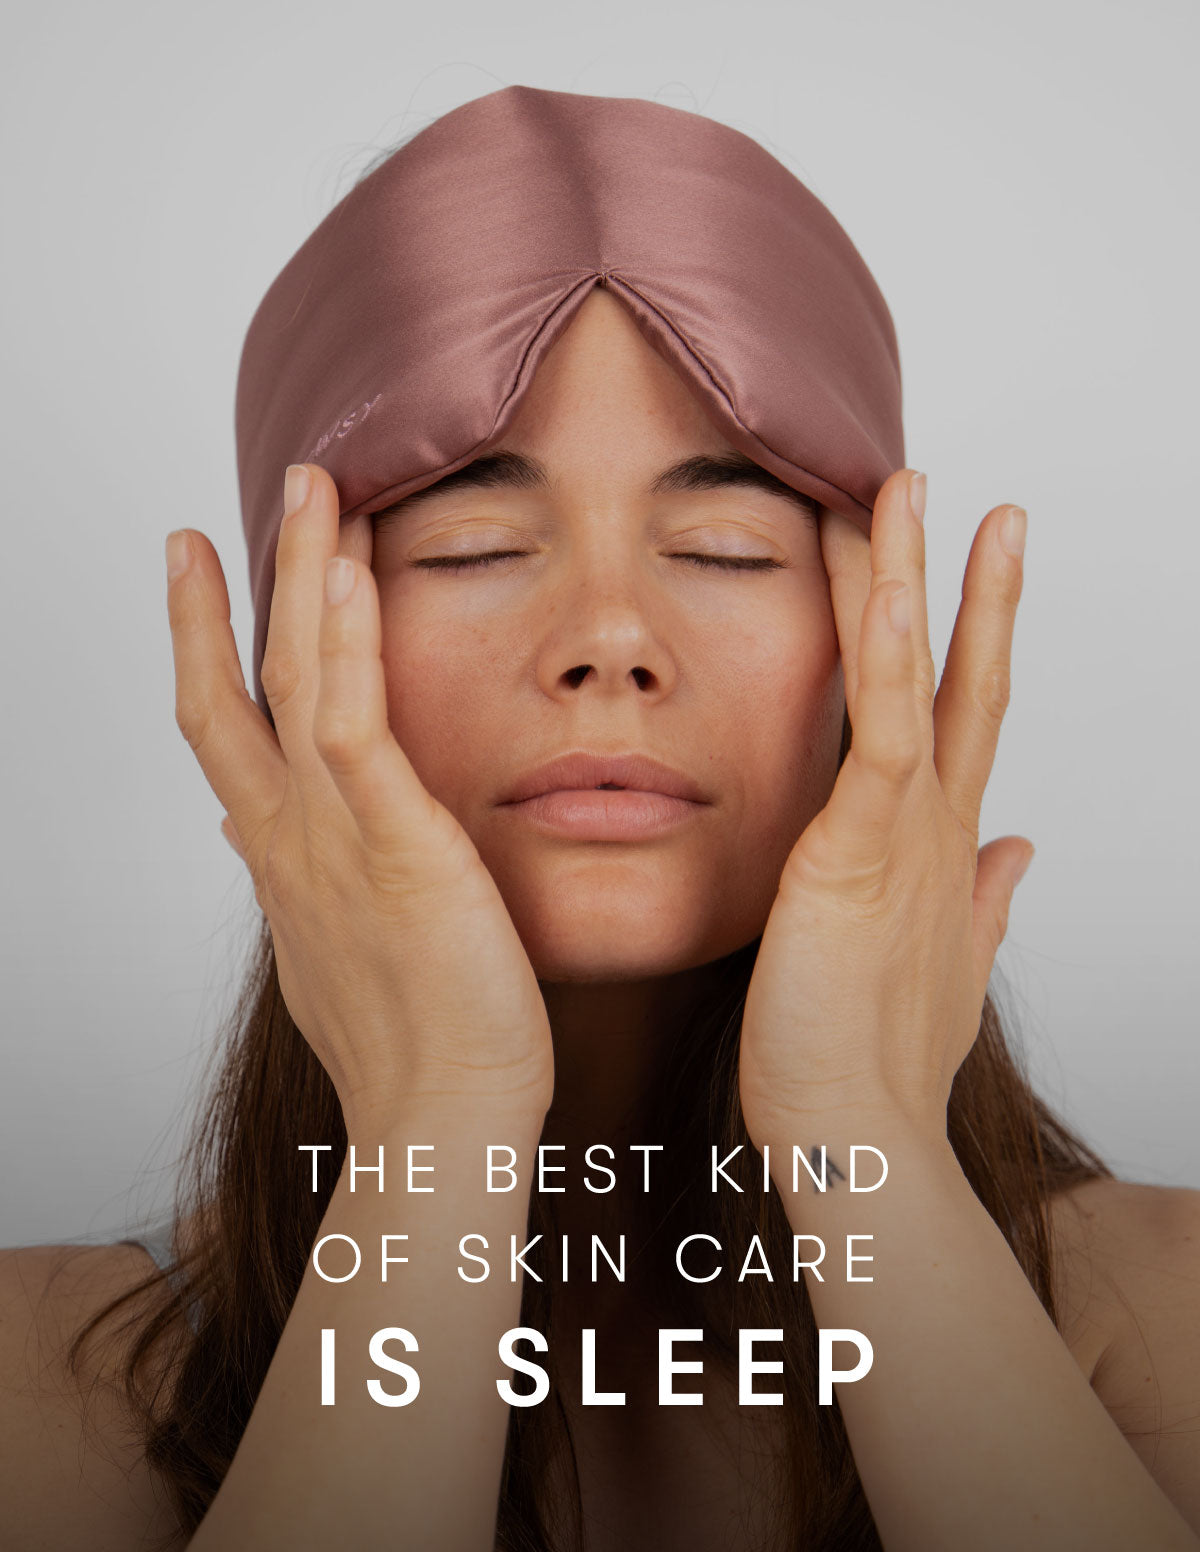 The best kind of skin care is sleep